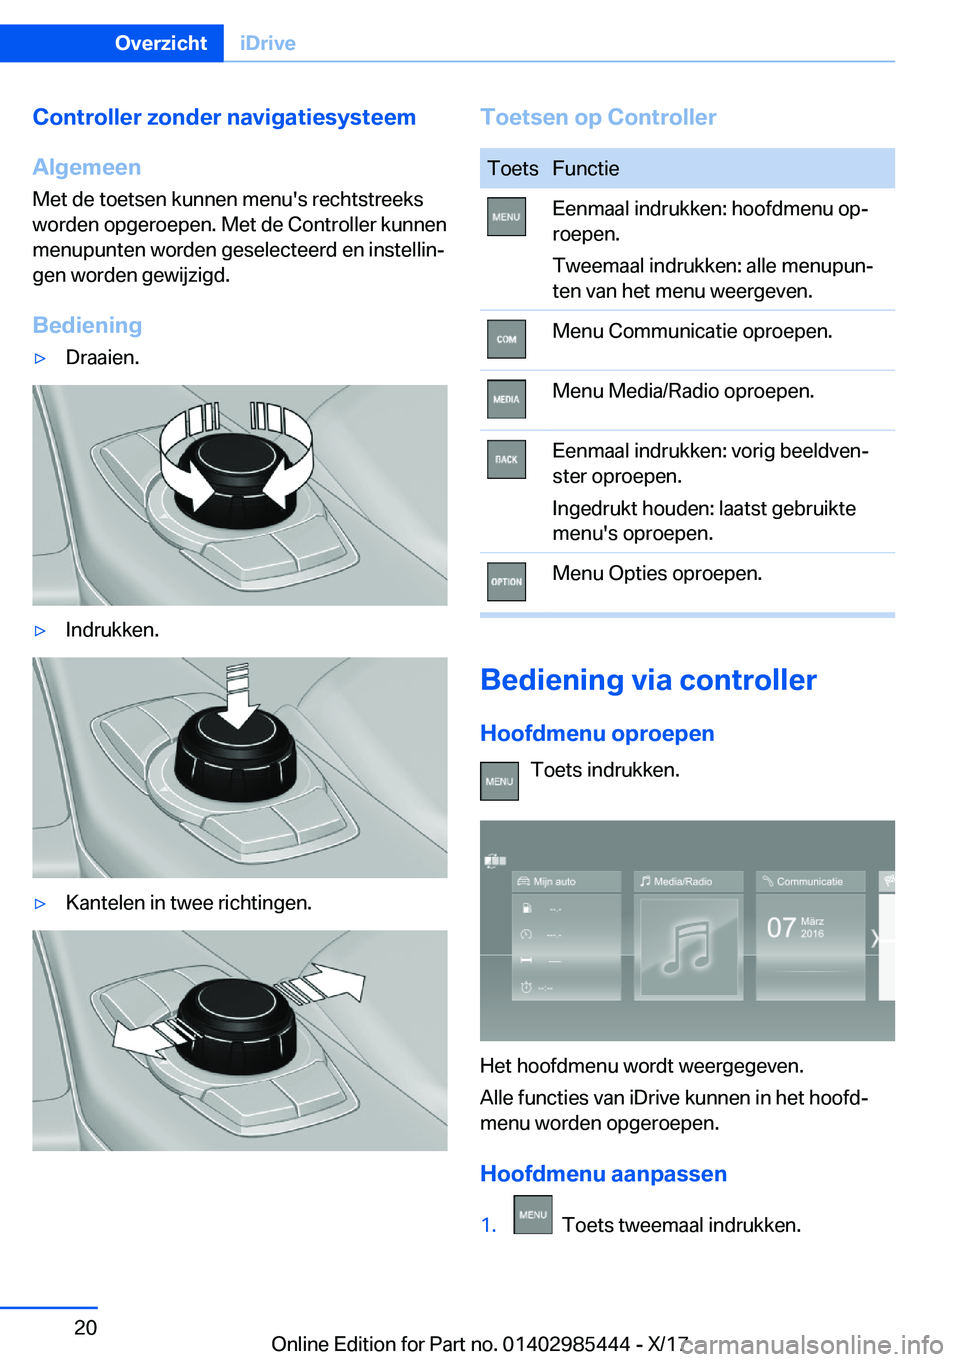 BMW X1 2018  Instructieboekjes (in Dutch) �C�o�n�t�r�o�l�l�e�r��z�o�n�d�e�r��n�a�v�i�g�a�t�i�e�s�y�s�t�e�e�m
�A�l�g�e�m�e�e�n
�M�e�t� �d�e� �t�o�e�t�s�e�n� �k�u�n�n�e�n� �m�e�n�u�'�s� �r�e�c�h�t�s�t�r�e�e�k�s �w�o�r�d�e�n� �o�p�g�e�r�o�